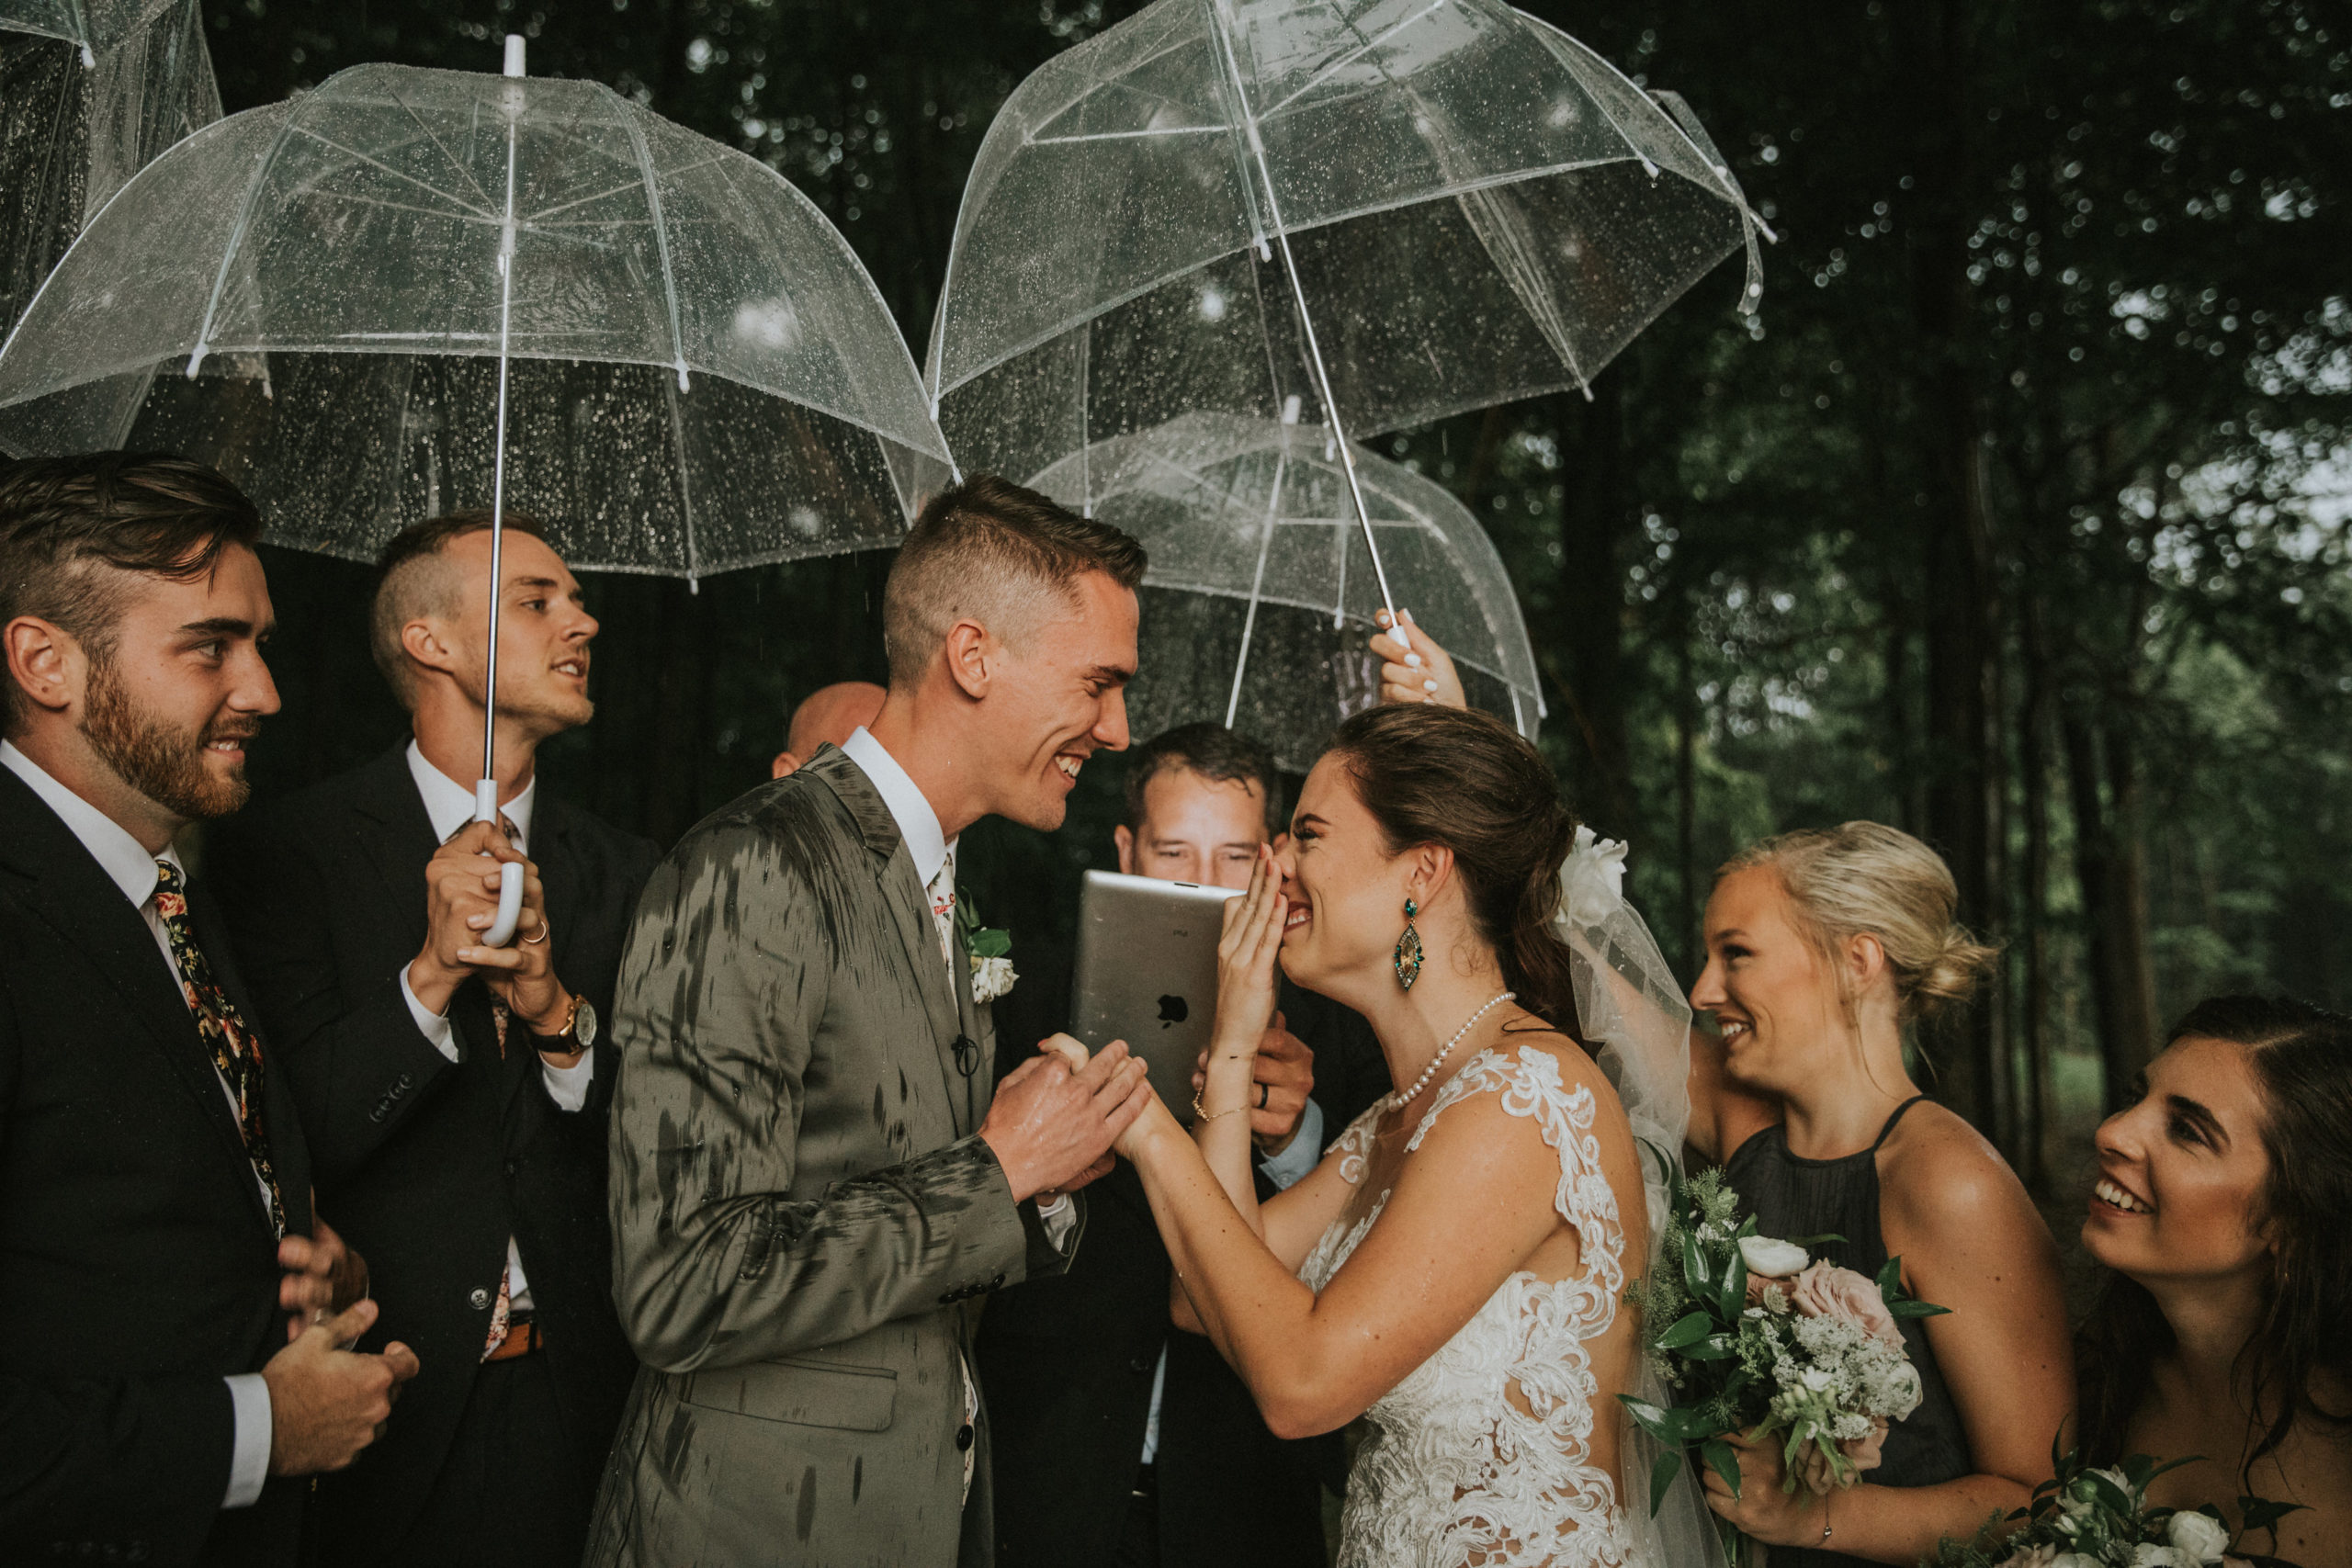 Bride and Groom standing under umbrellas getting married in the rain